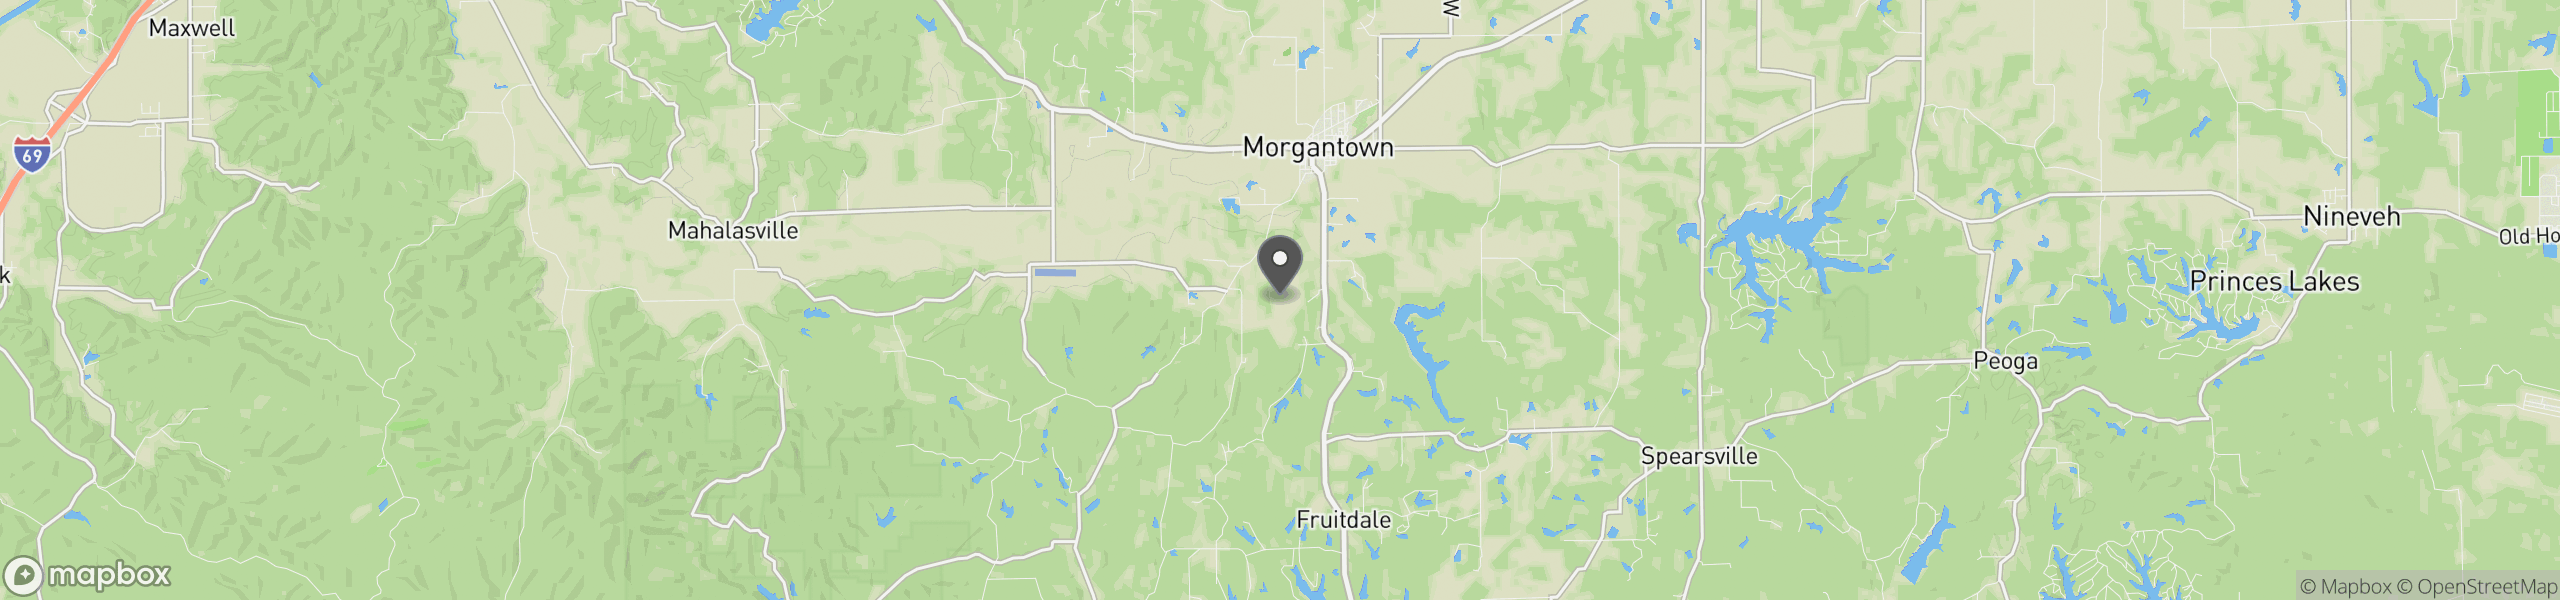 Morgantown, IN 46160